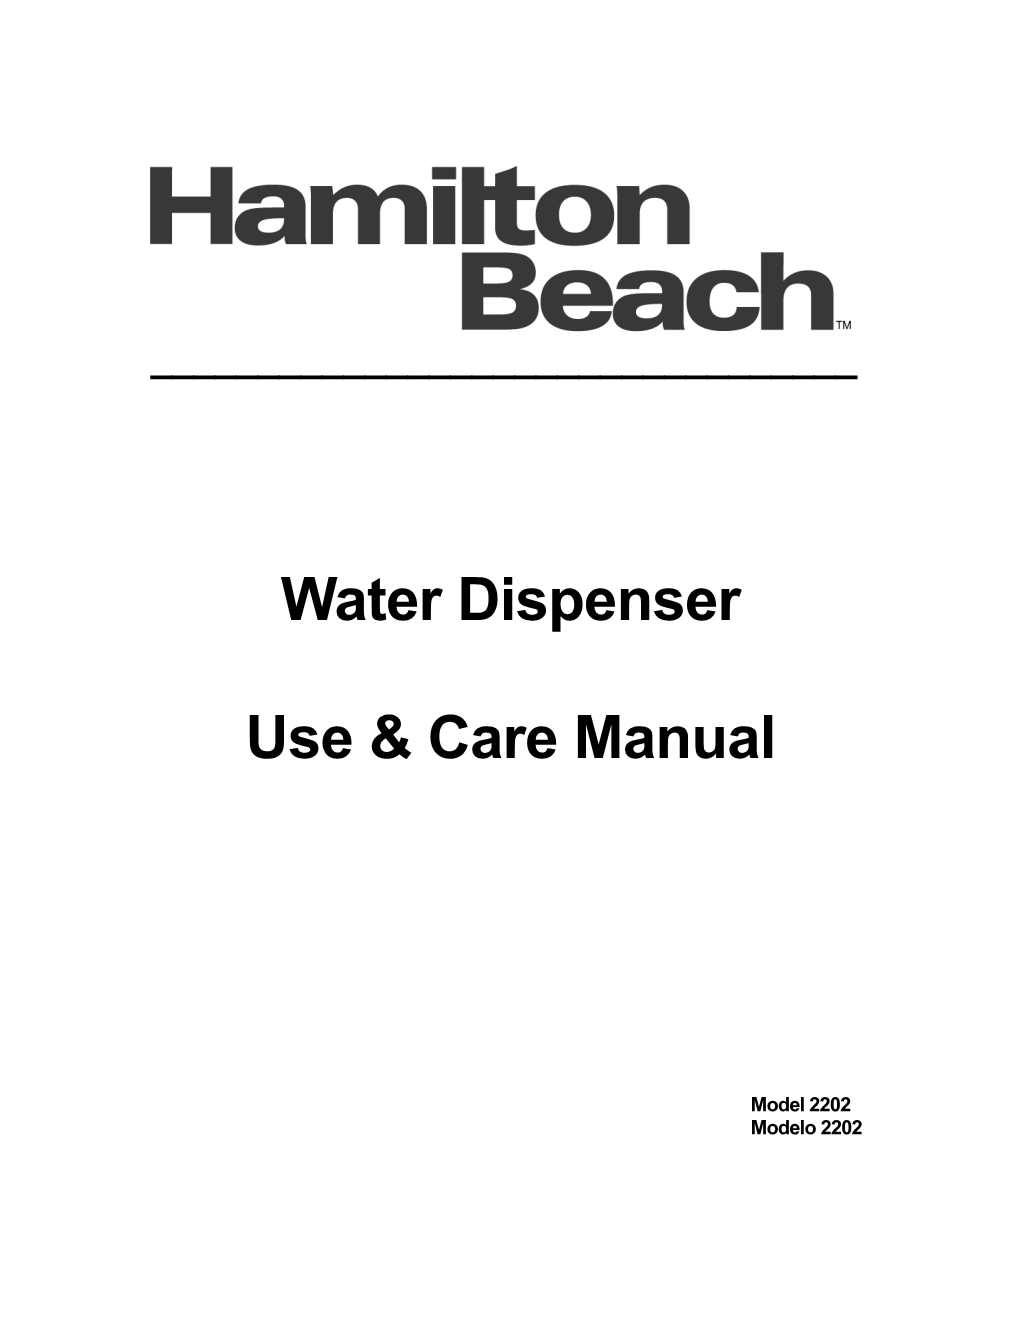 Water Dispenser Use & Care Manual